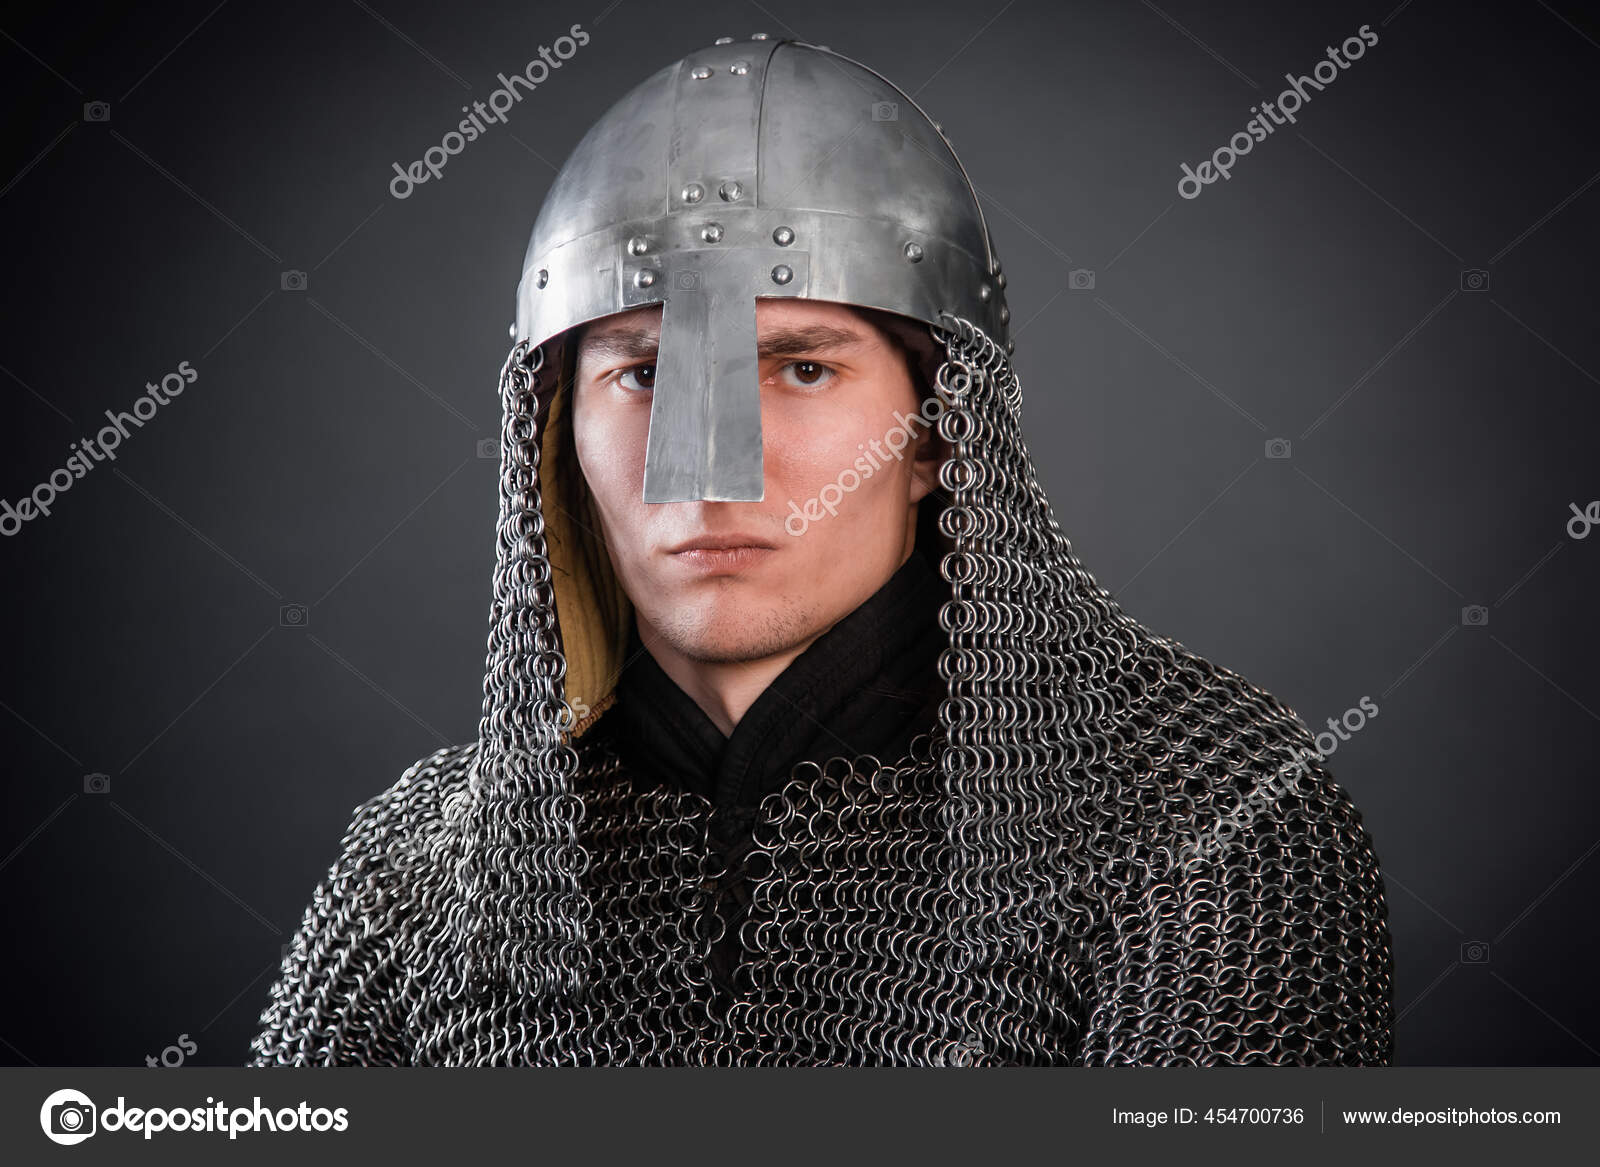 https://st2.depositphotos.com/17988818/45470/i/1600/depositphotos_454700736-stock-photo-portrait-medieval-warrior-viking-age.jpg